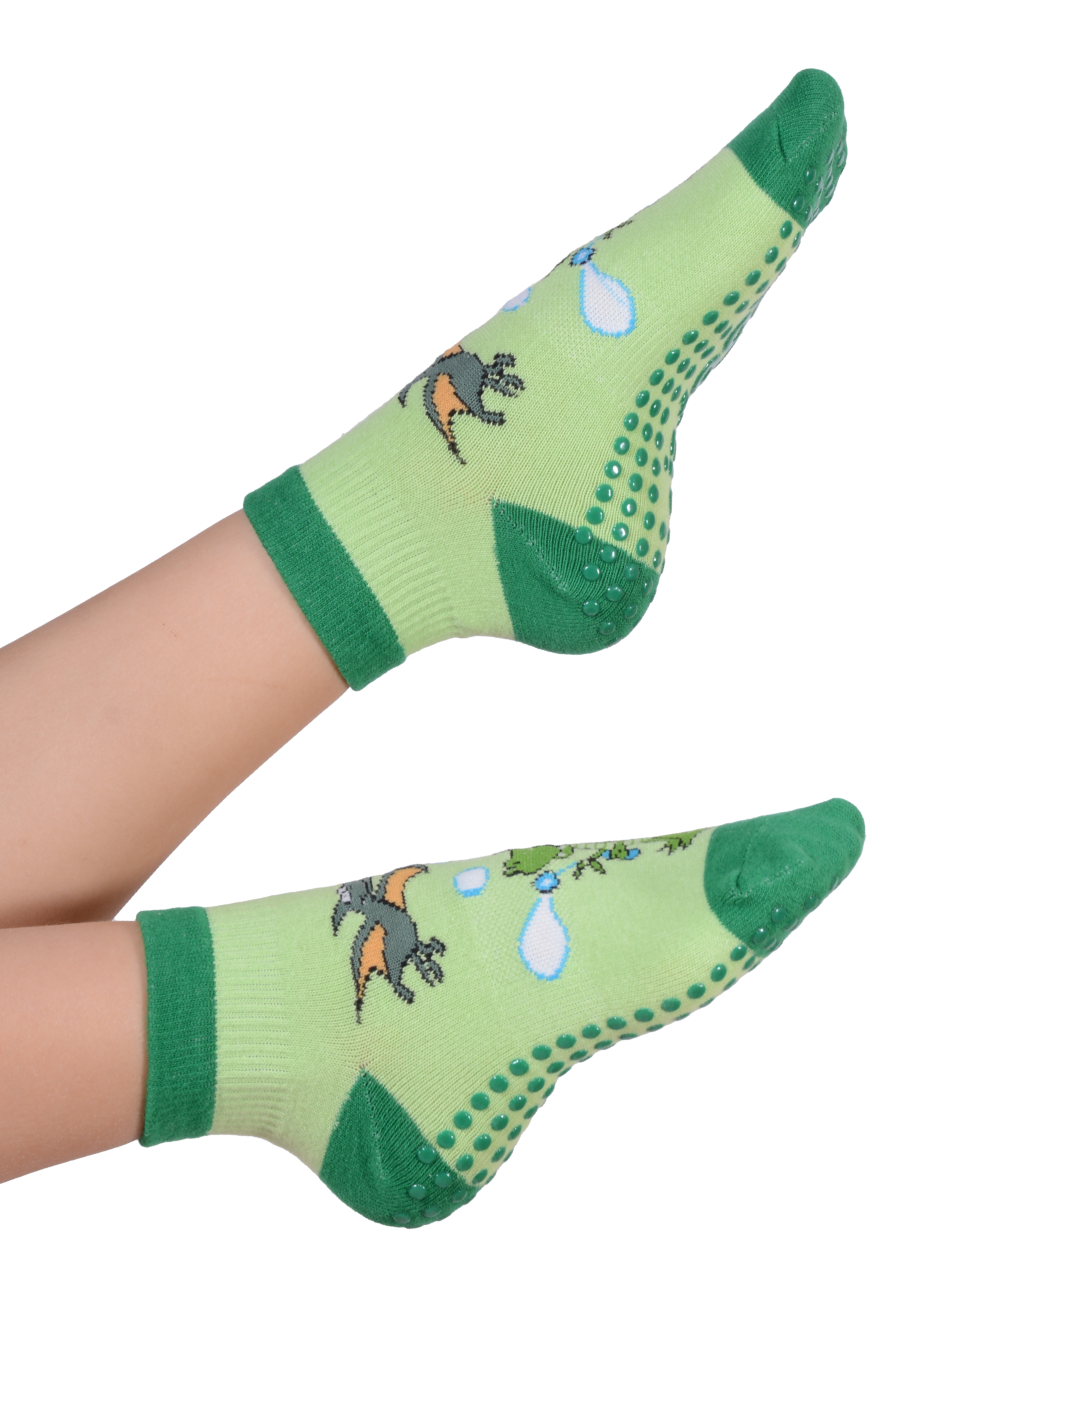 No Slip Gripper Socks for Yoga Pilates Barre Hospital, Anti Skid Slipper  Socks for Pilates, Home, Kickboxing, No Slide, Multi Pack price in UAE,  UAE